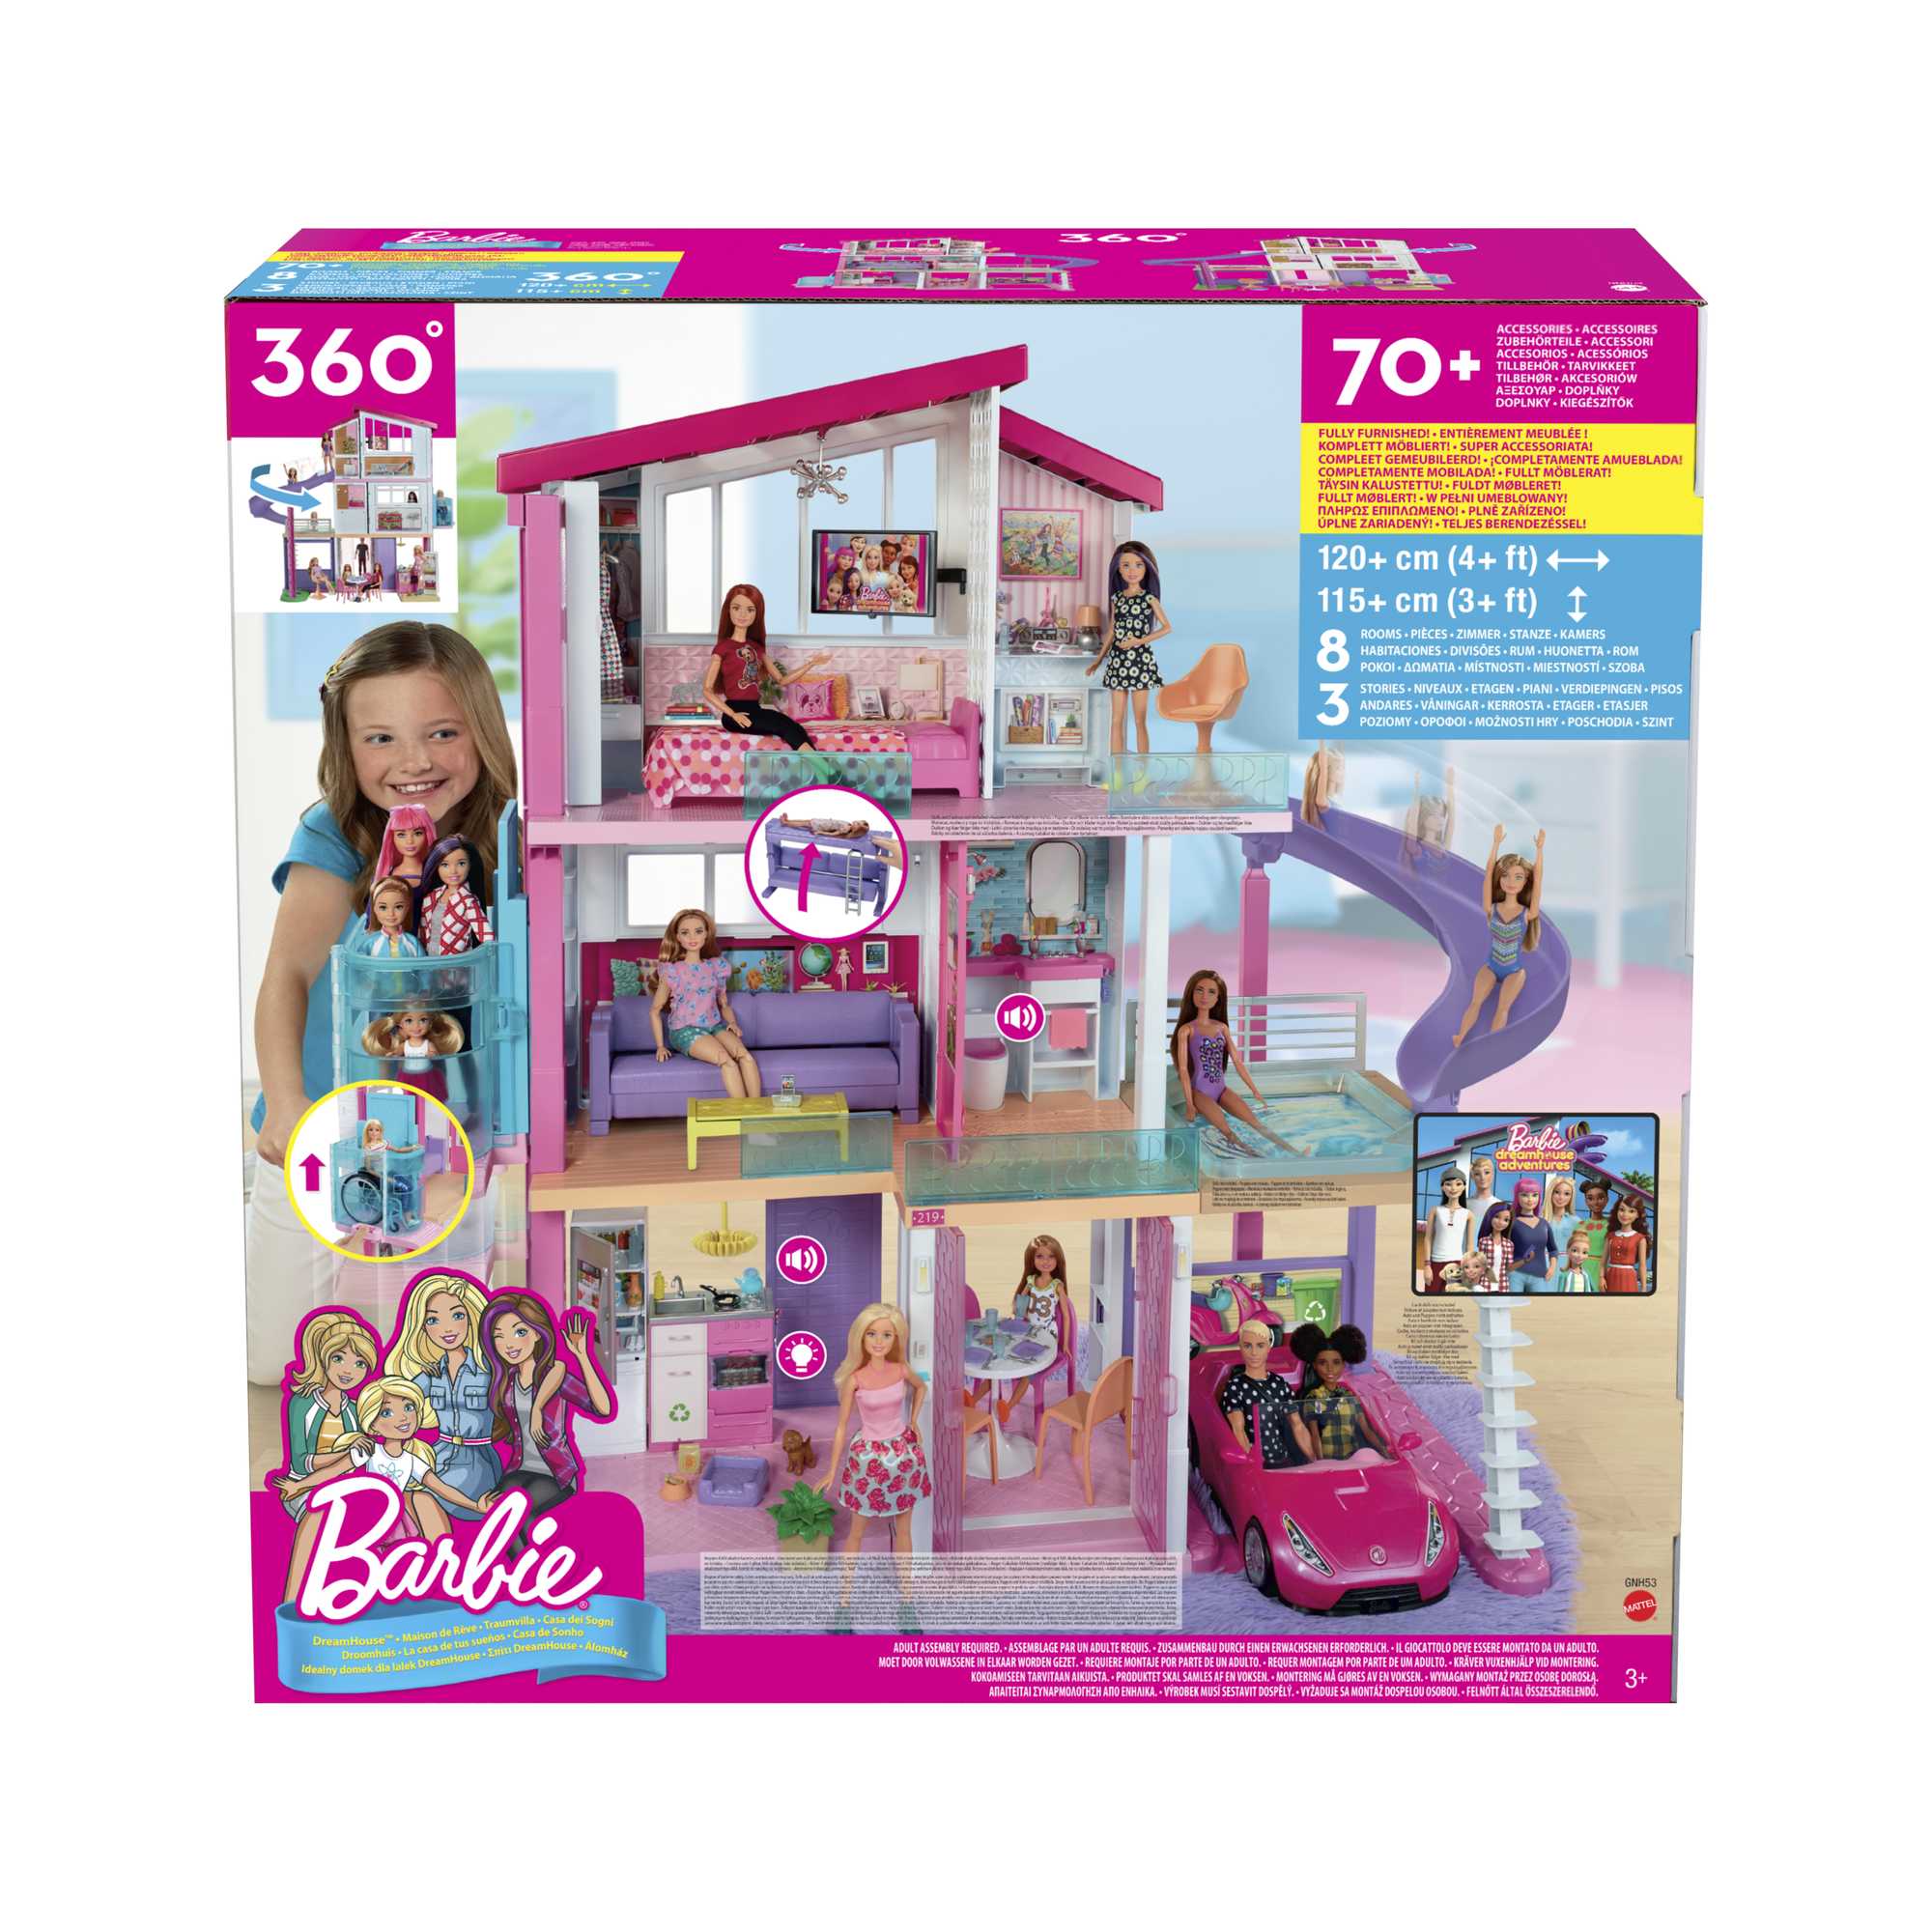 Barbie Dreamhouse Playset |